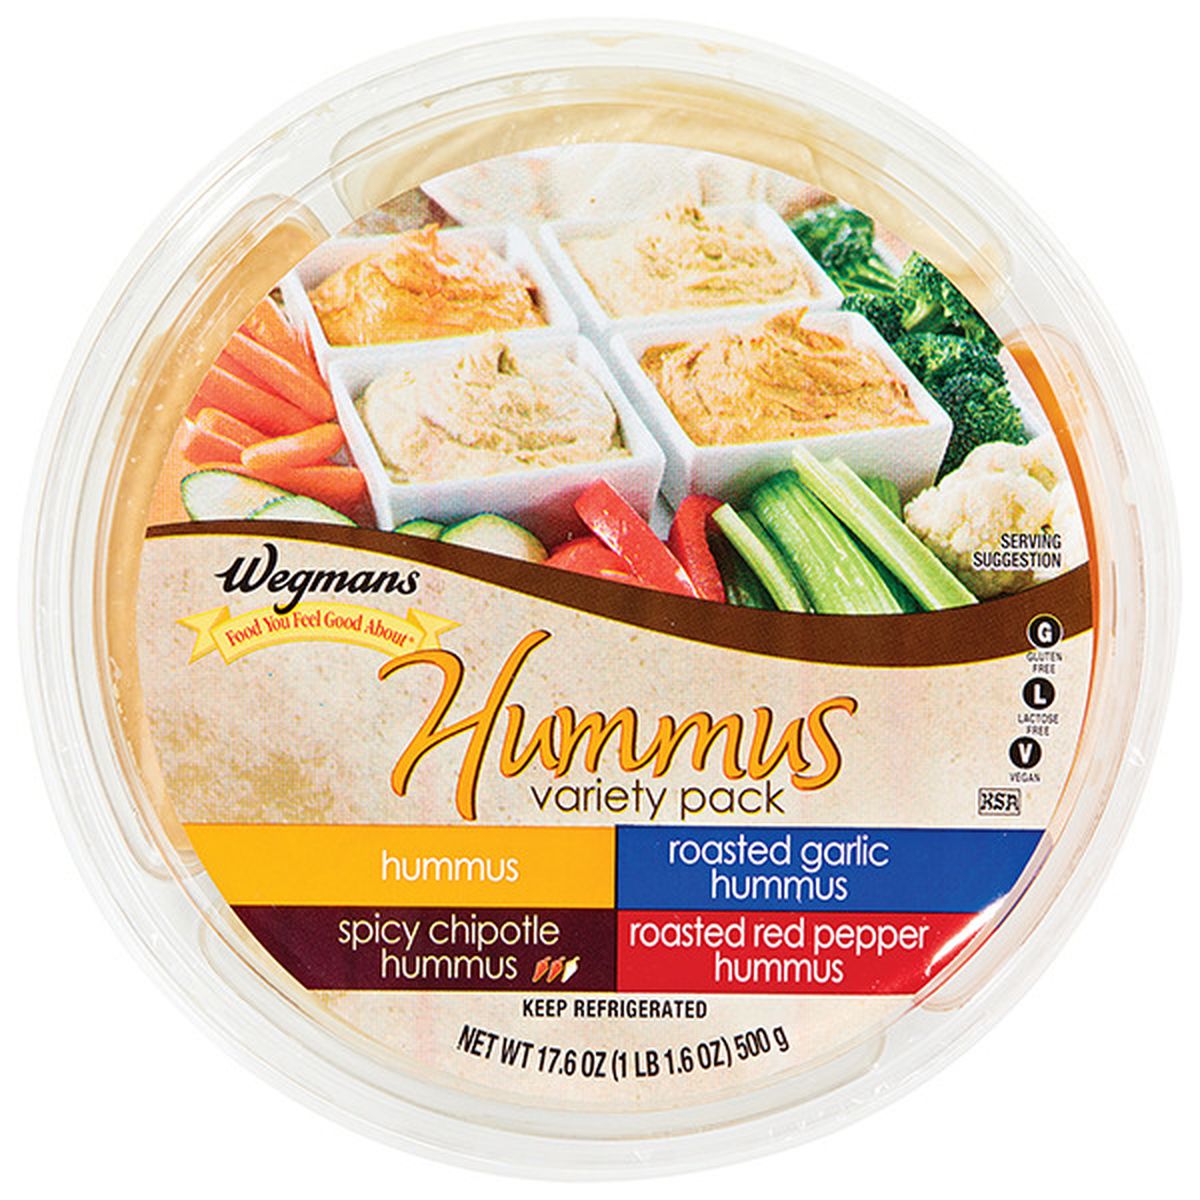 Calories in Wegmans Variety Pack Hummus